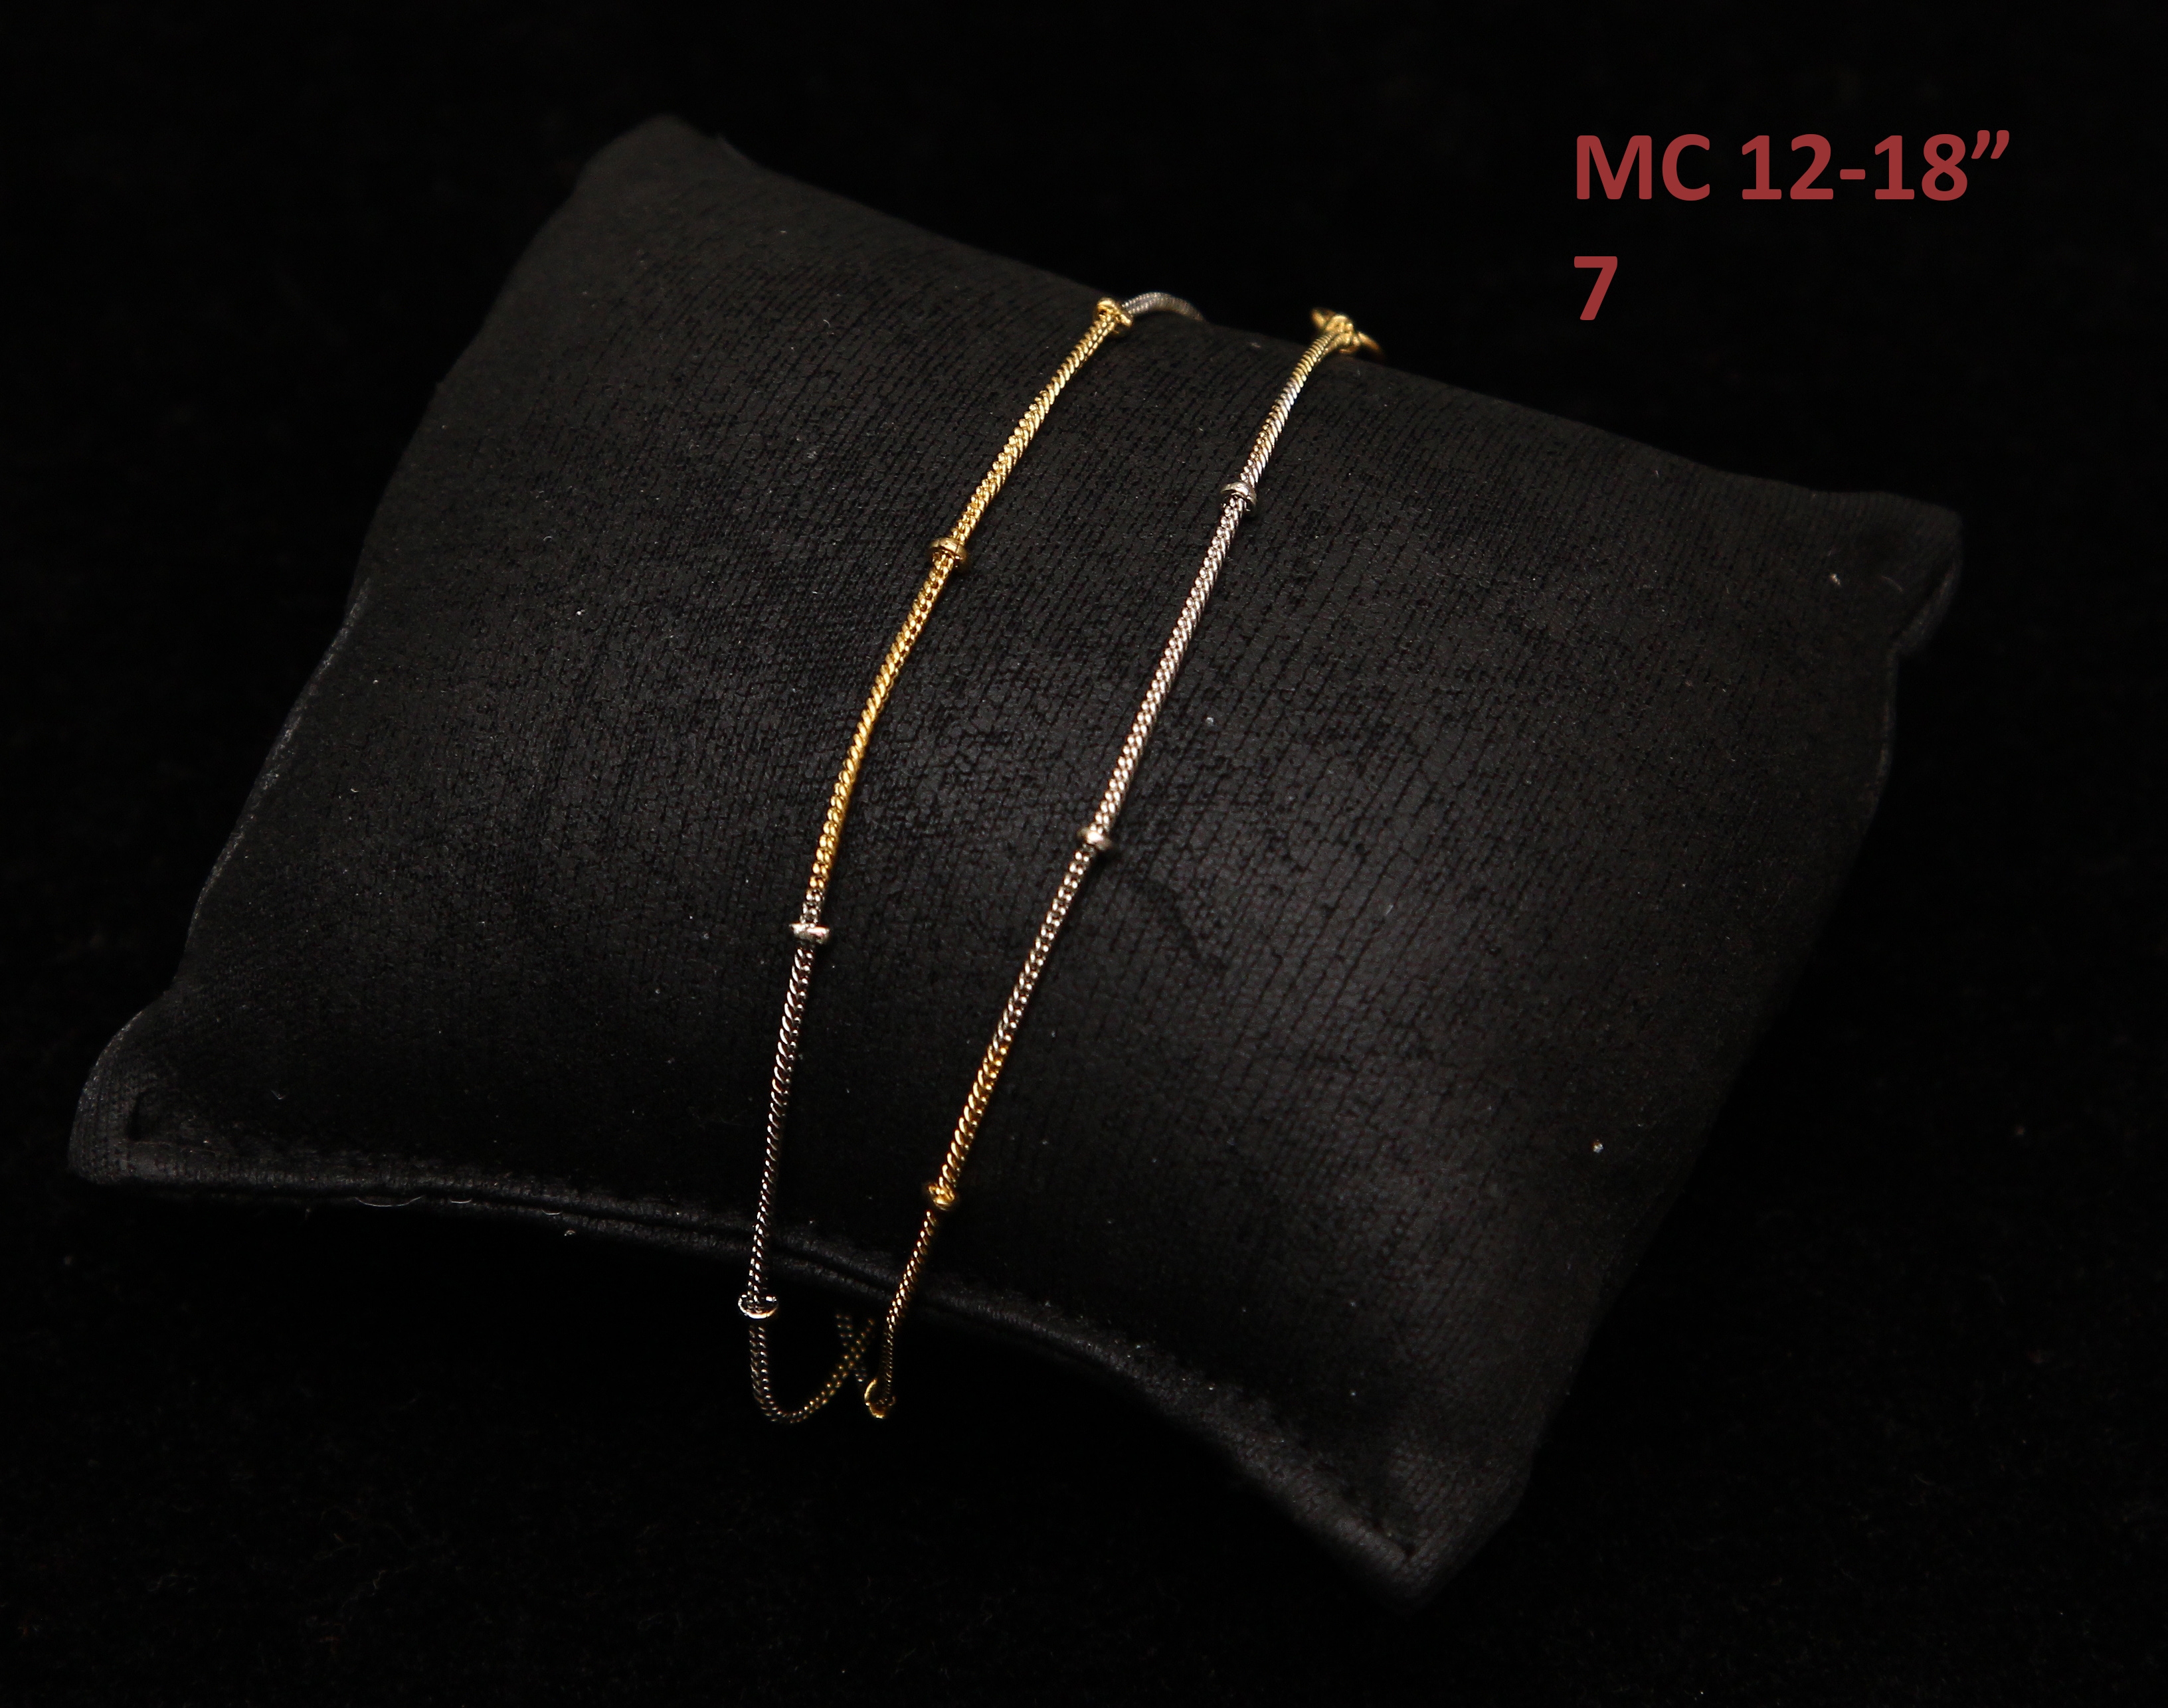 55Carat | Beautiful Attractive Brass Pendant Necklace Chain For Women, Girls And Ladies Italian Design Modern Fashion Jewellery Mc-12-18"-Gj Size-18"